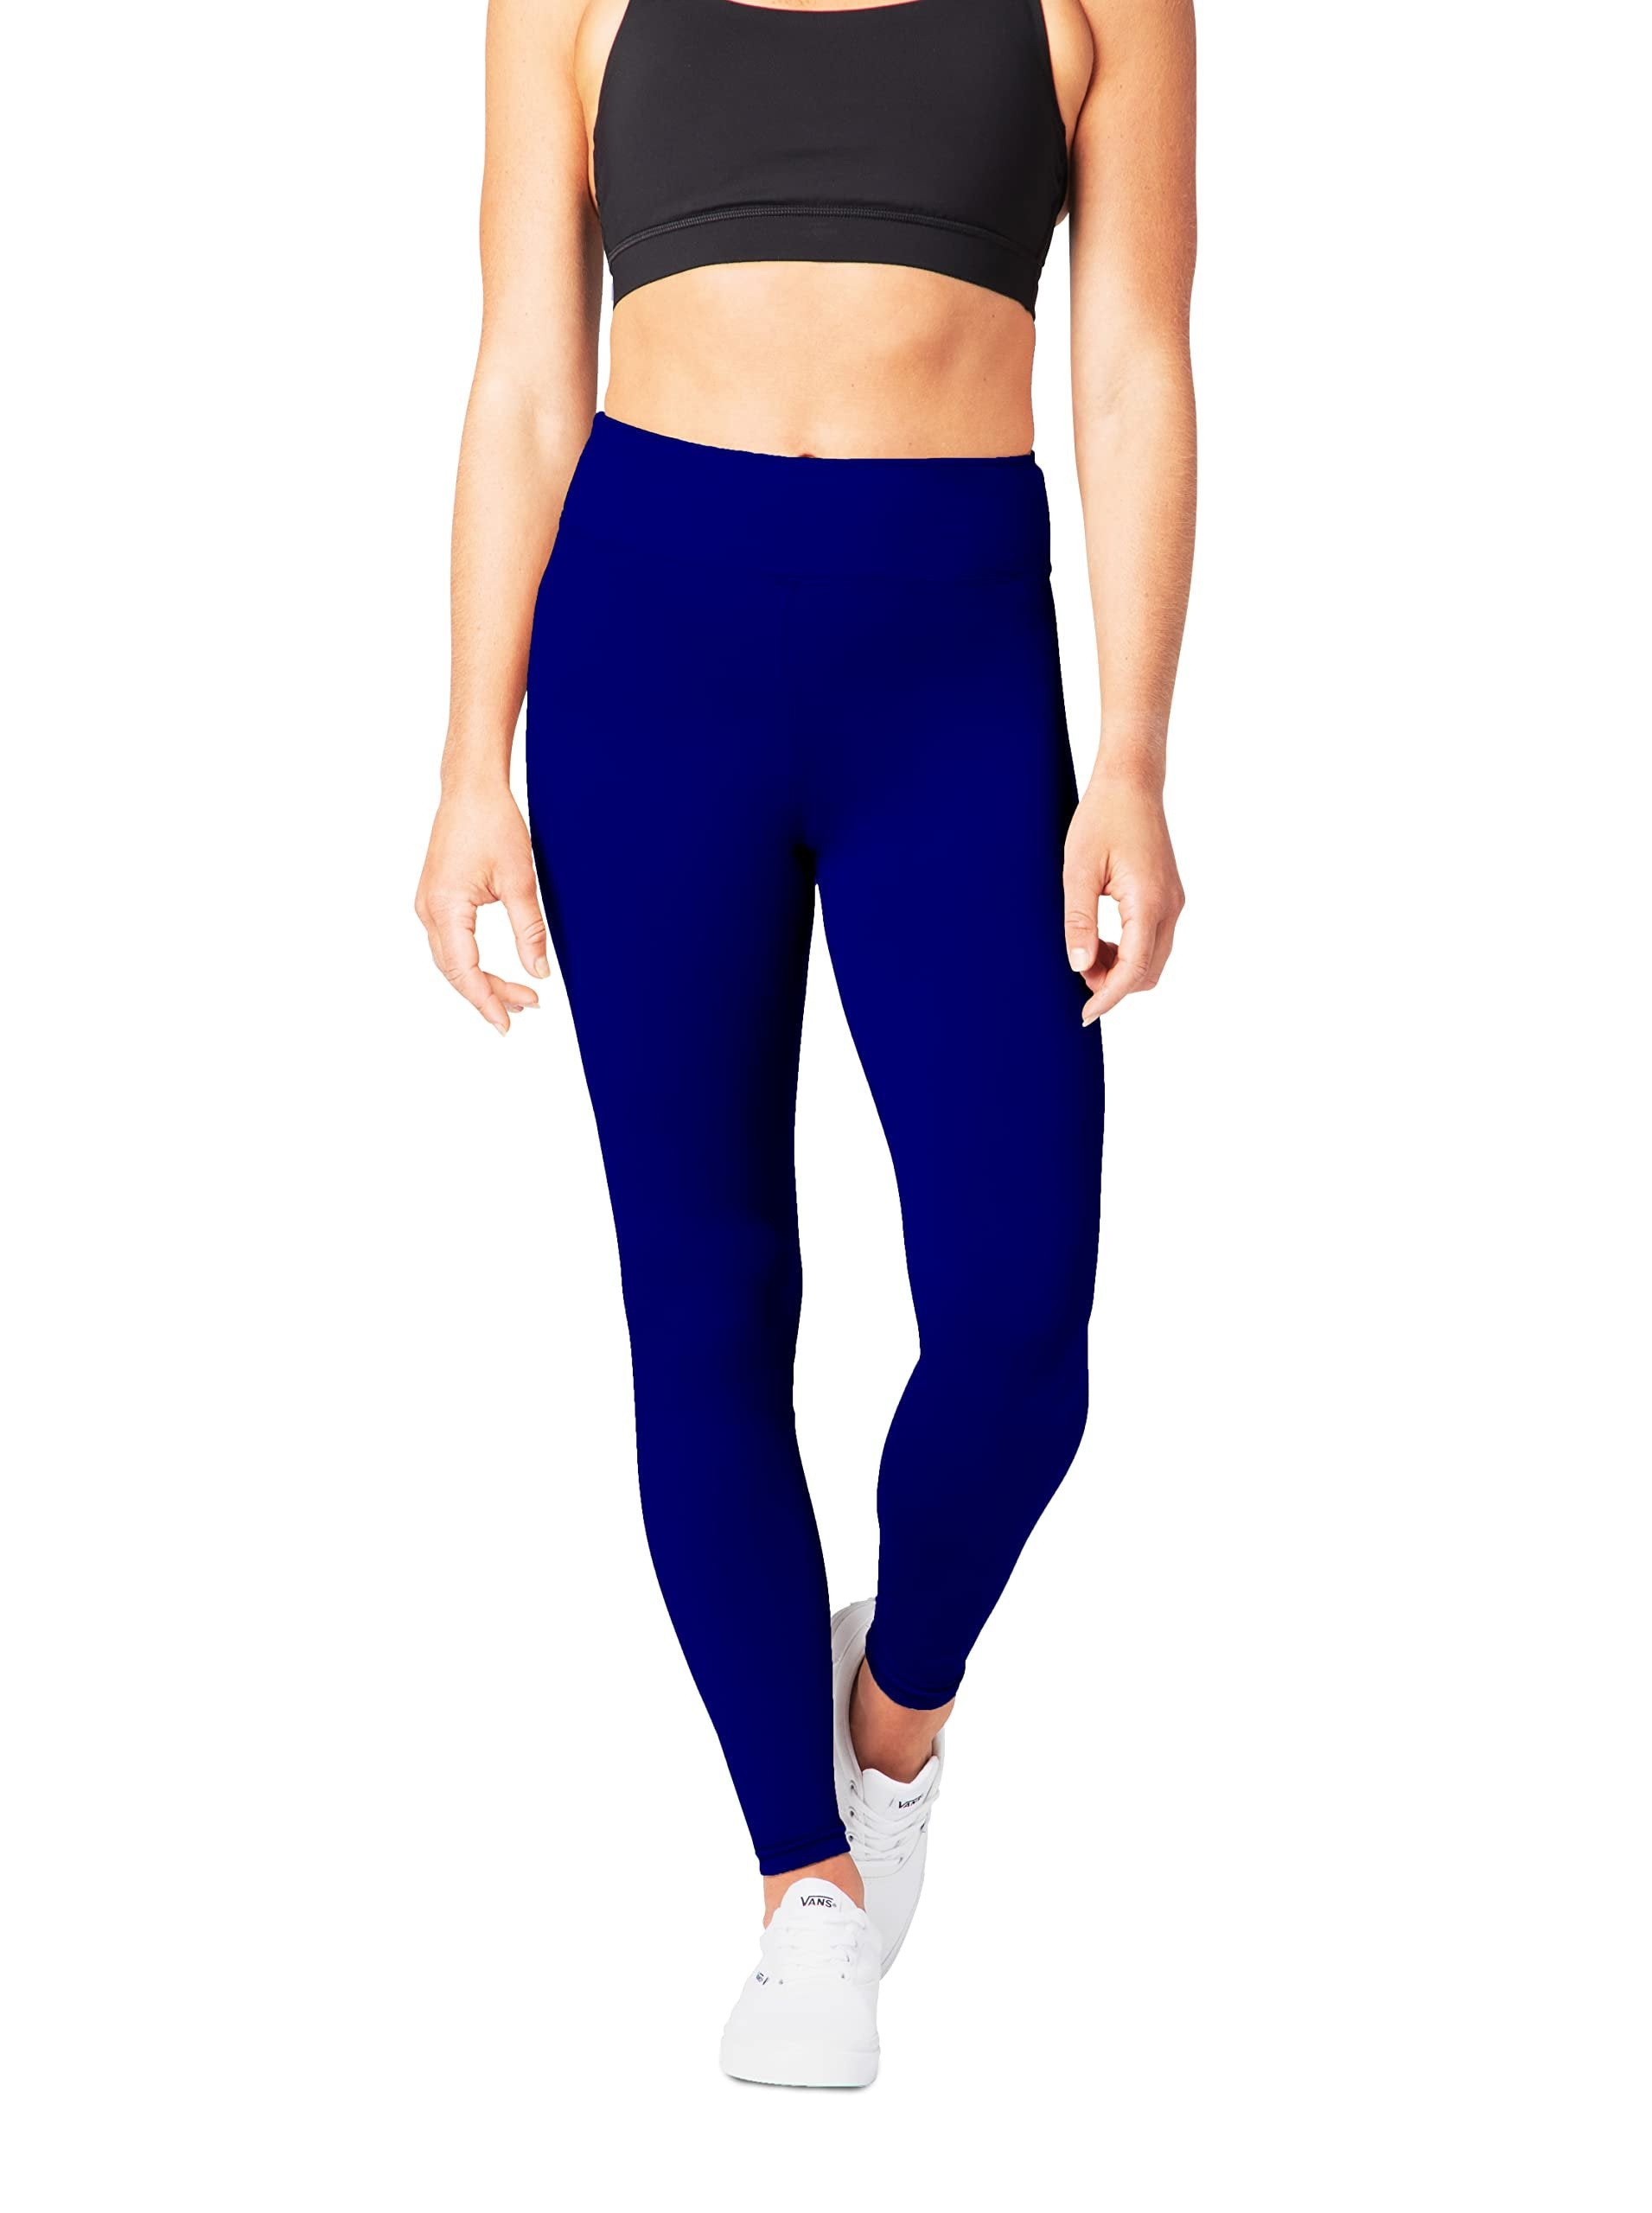 SATINA High Waisted Leggings | Yoga Workout Pants | Plus & Regular Size, Royal Blue | 3 Waistband | Free Shipping